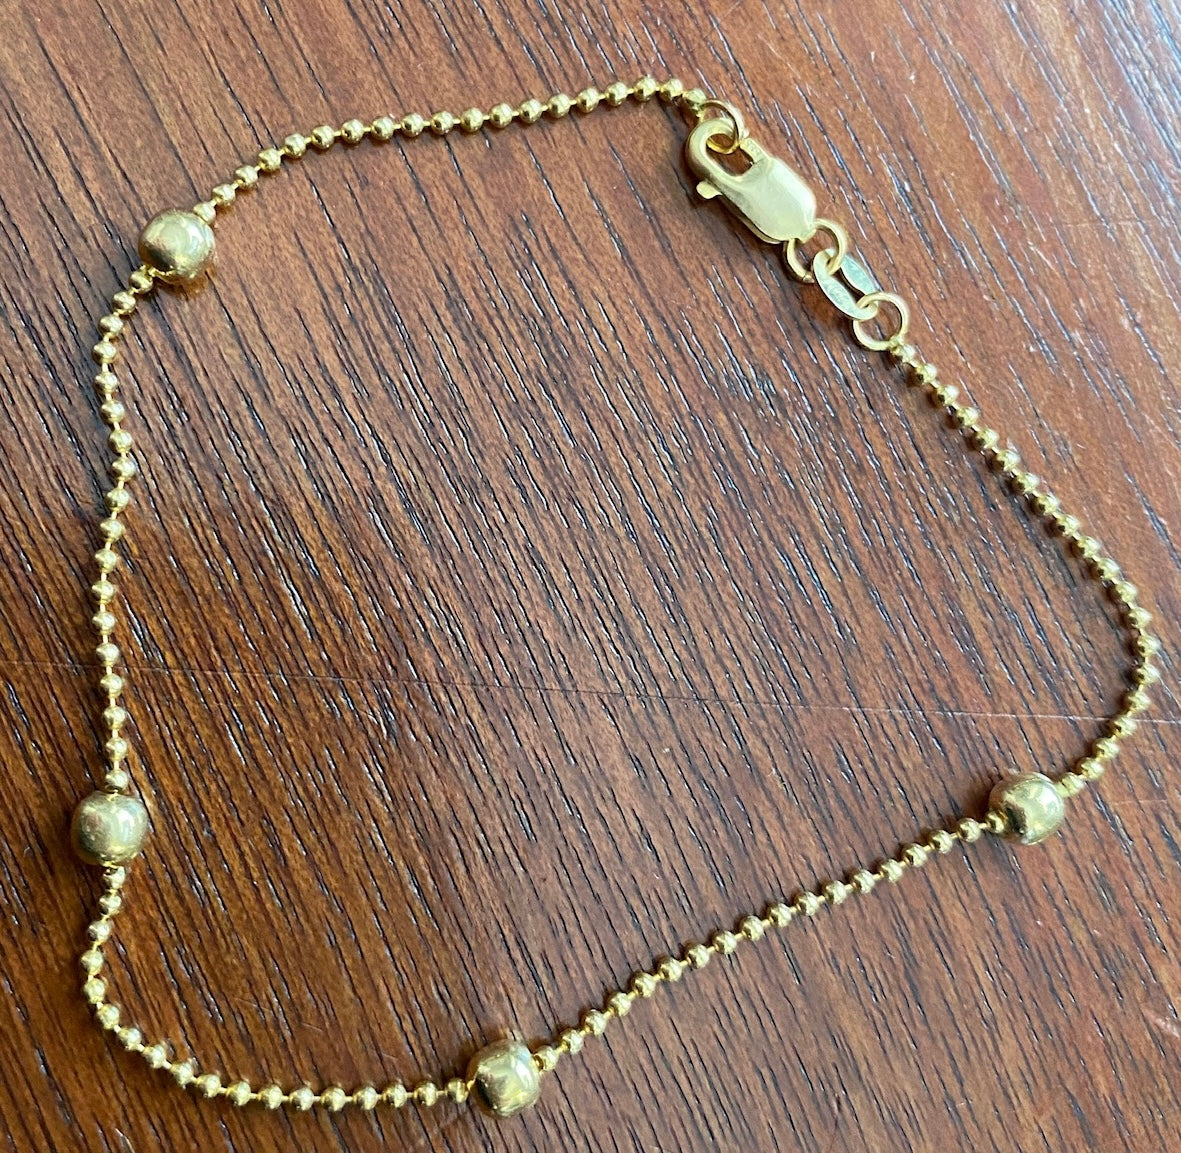 14k Yellow Gold Ball Bead Bracelet Signed B&M 6.75" Long